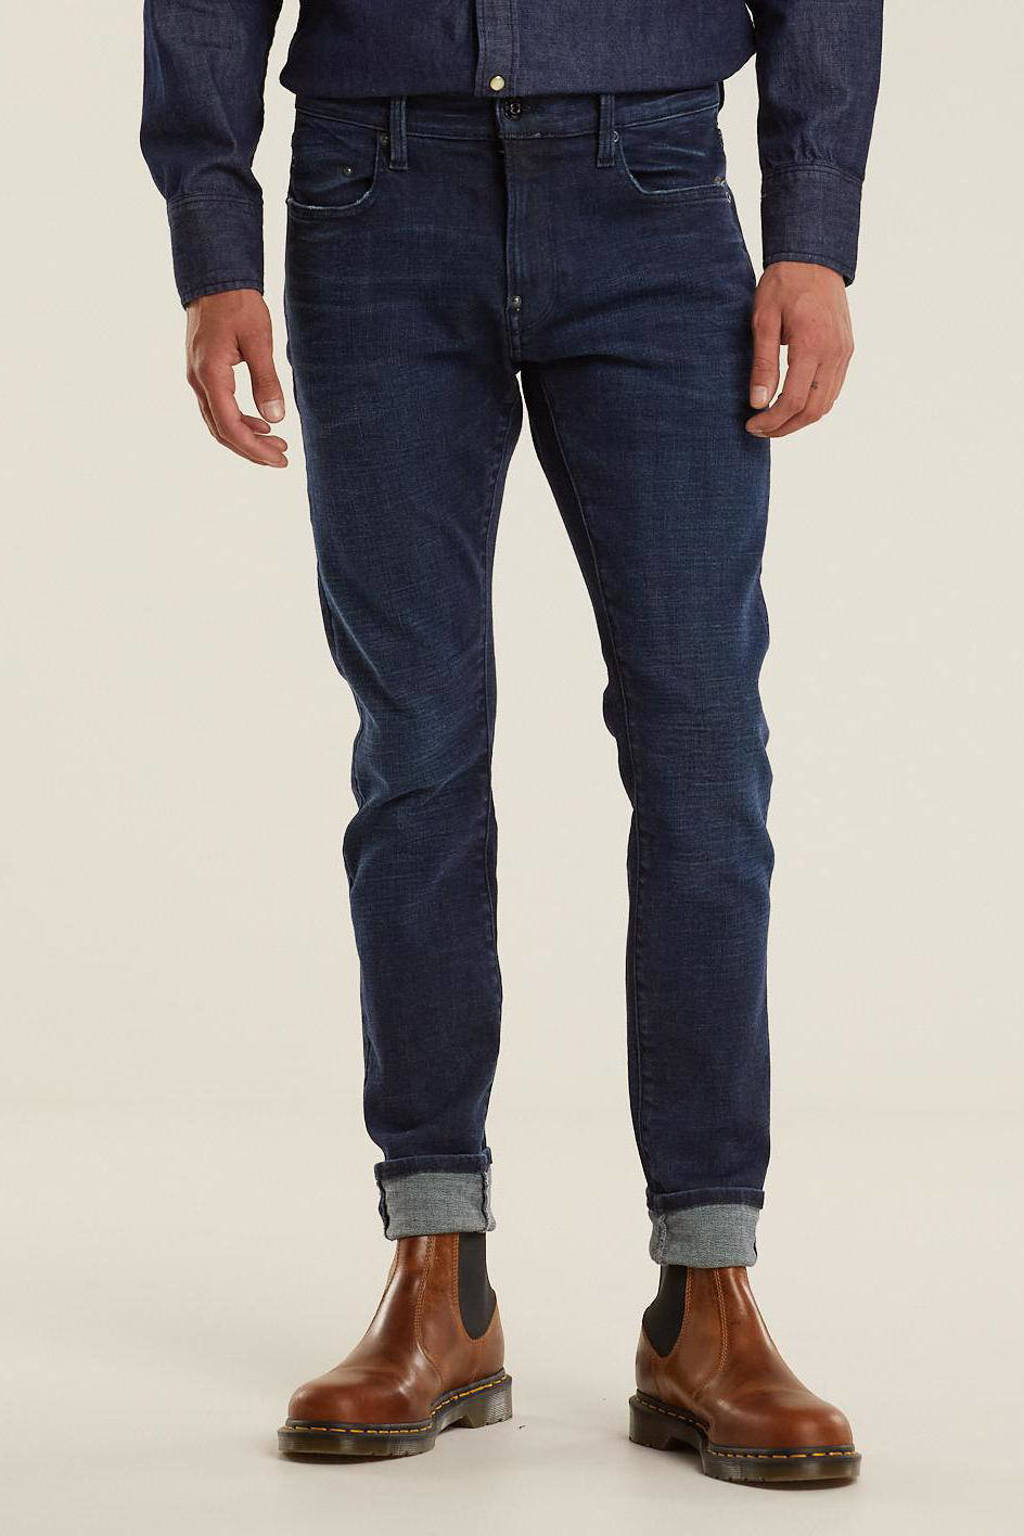 G-Star RAW Revend skinny jeans worn in ultramarine